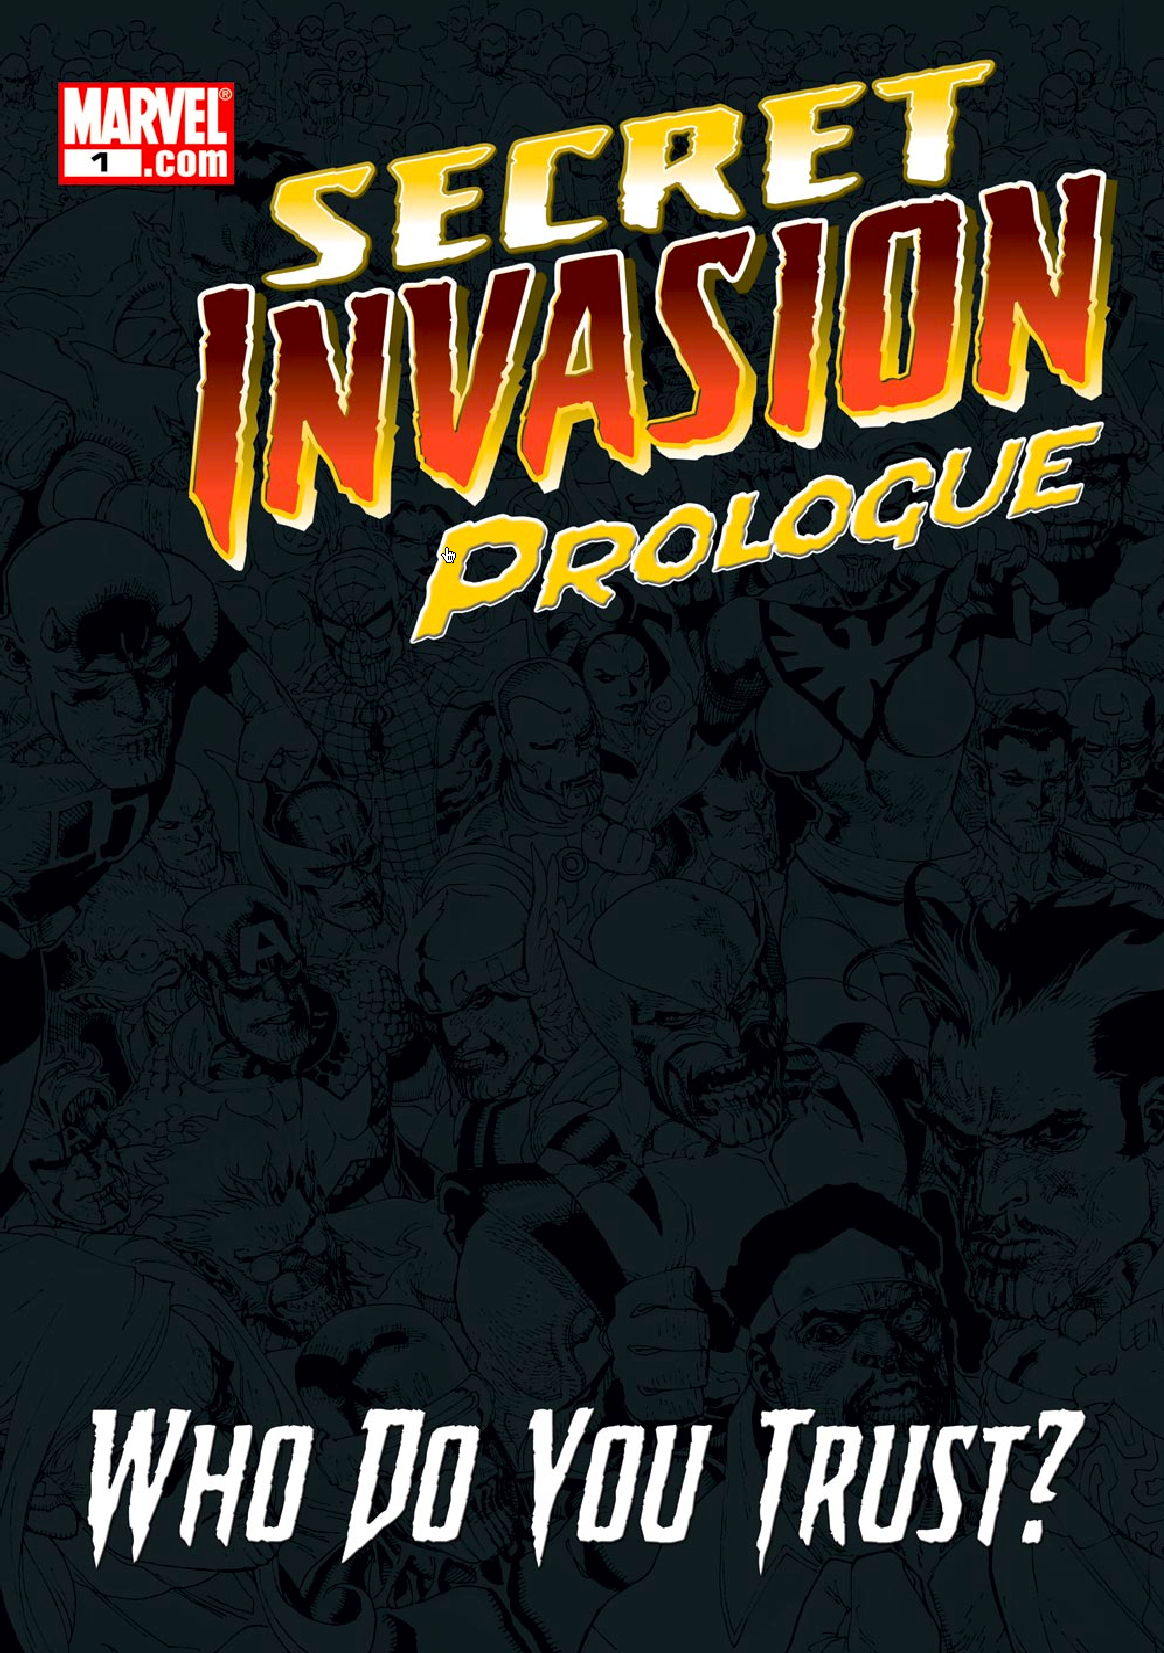 Read online Secret Invasion Prologue comic -  Issue # Full - 1